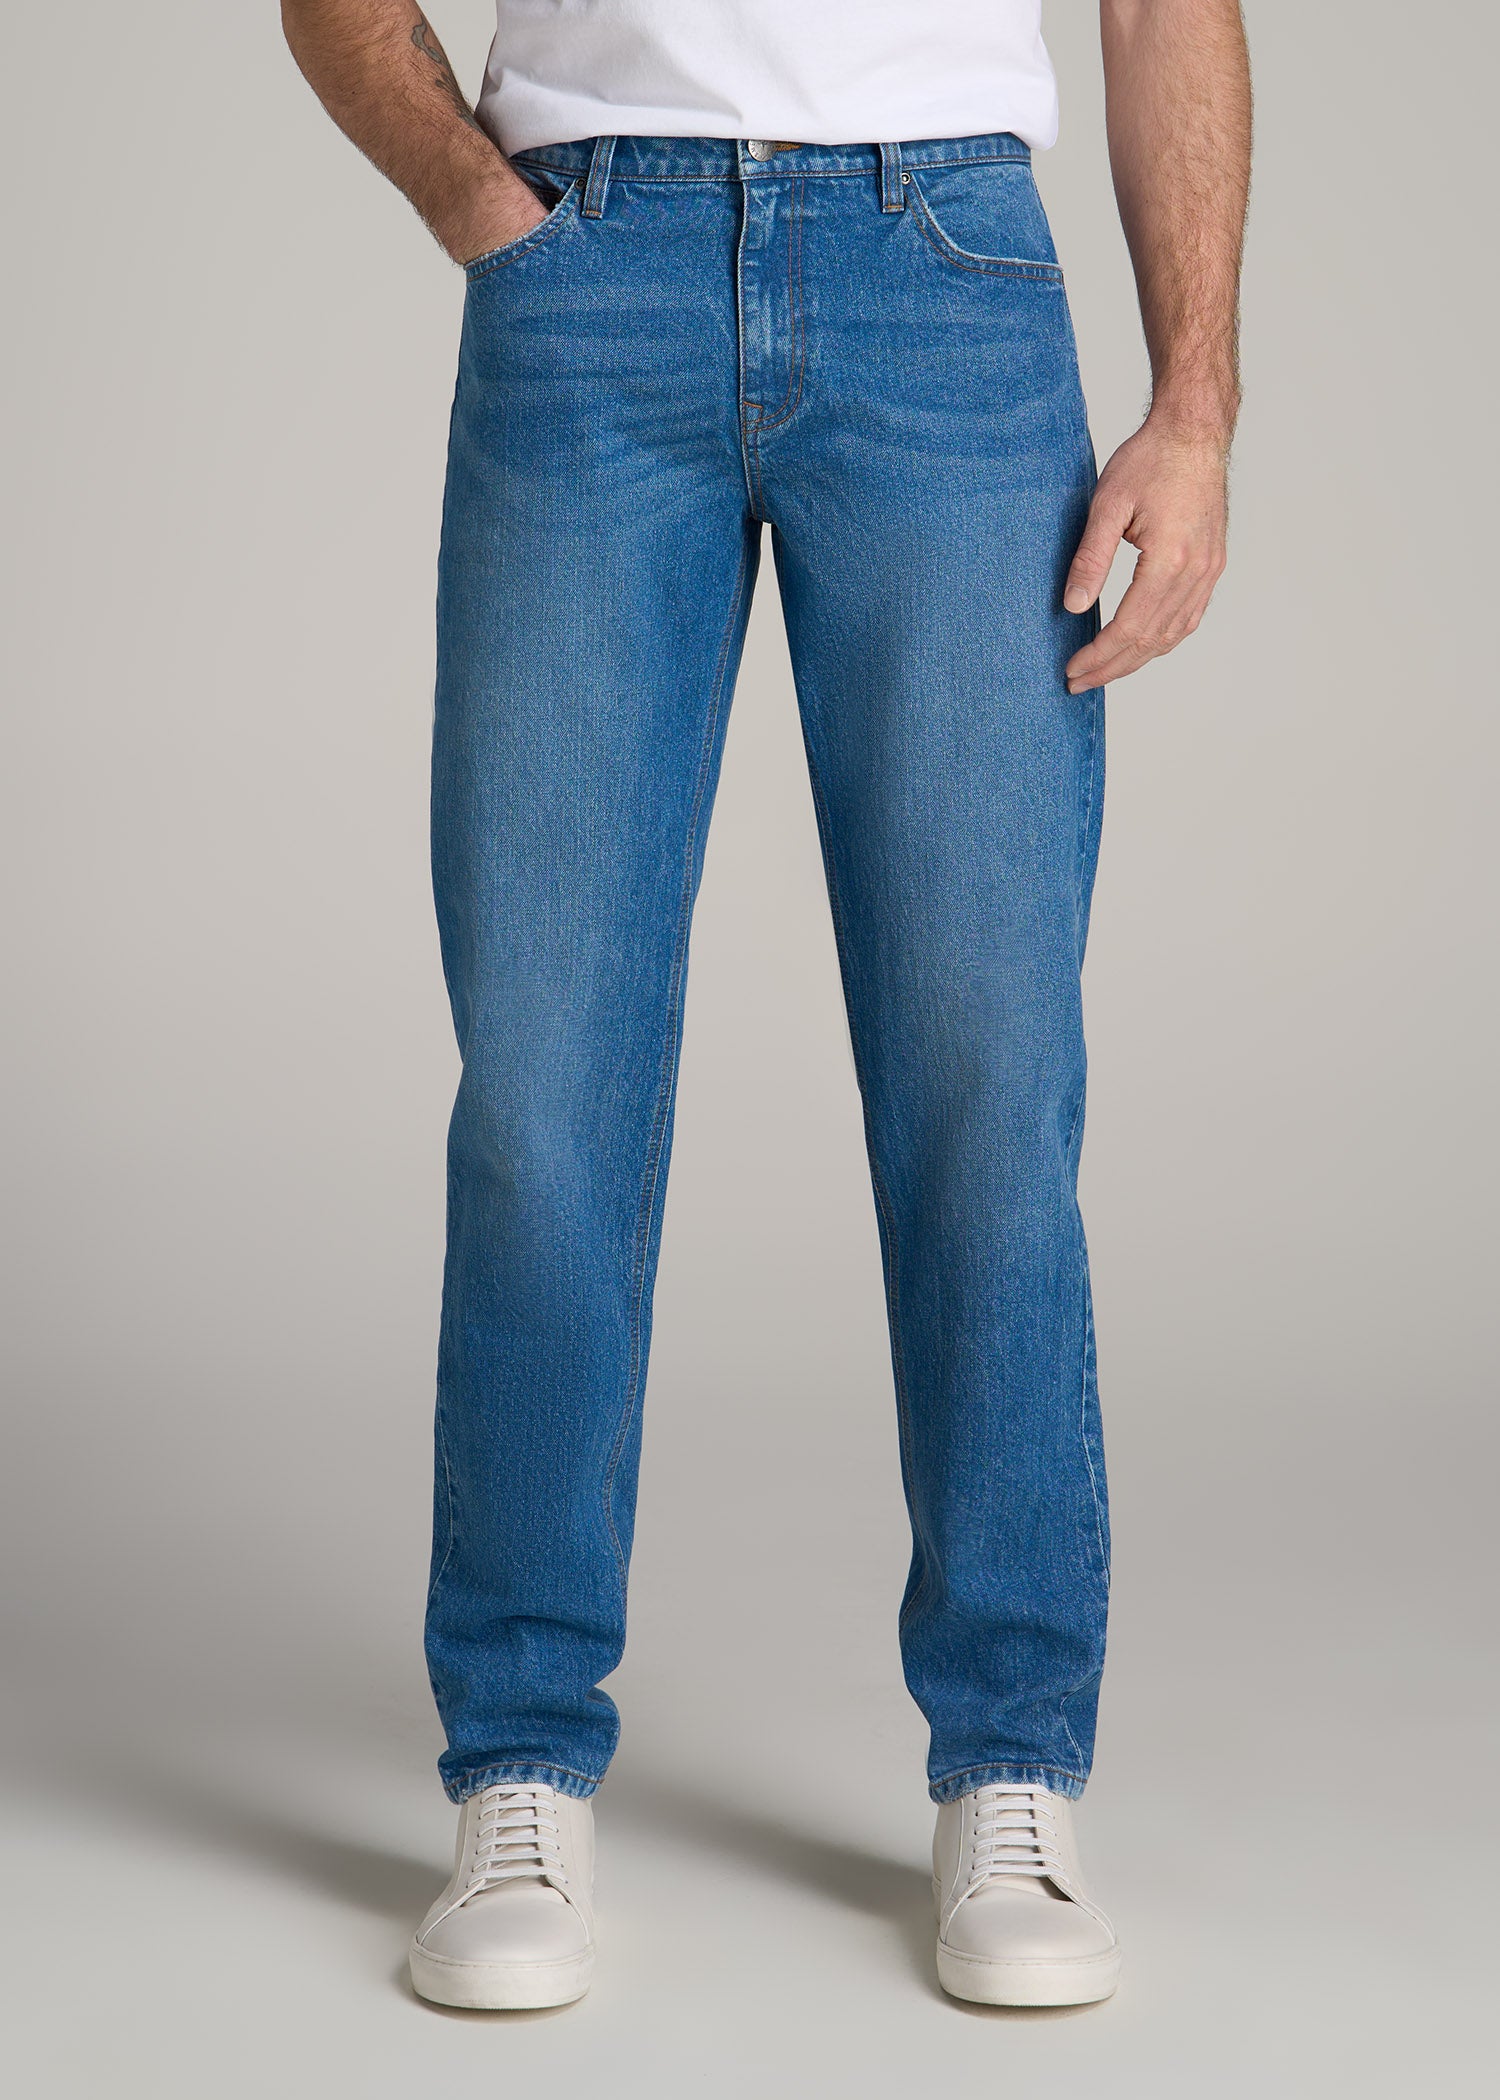 Men's Relaxed Fit Jeans, Men's Jeans